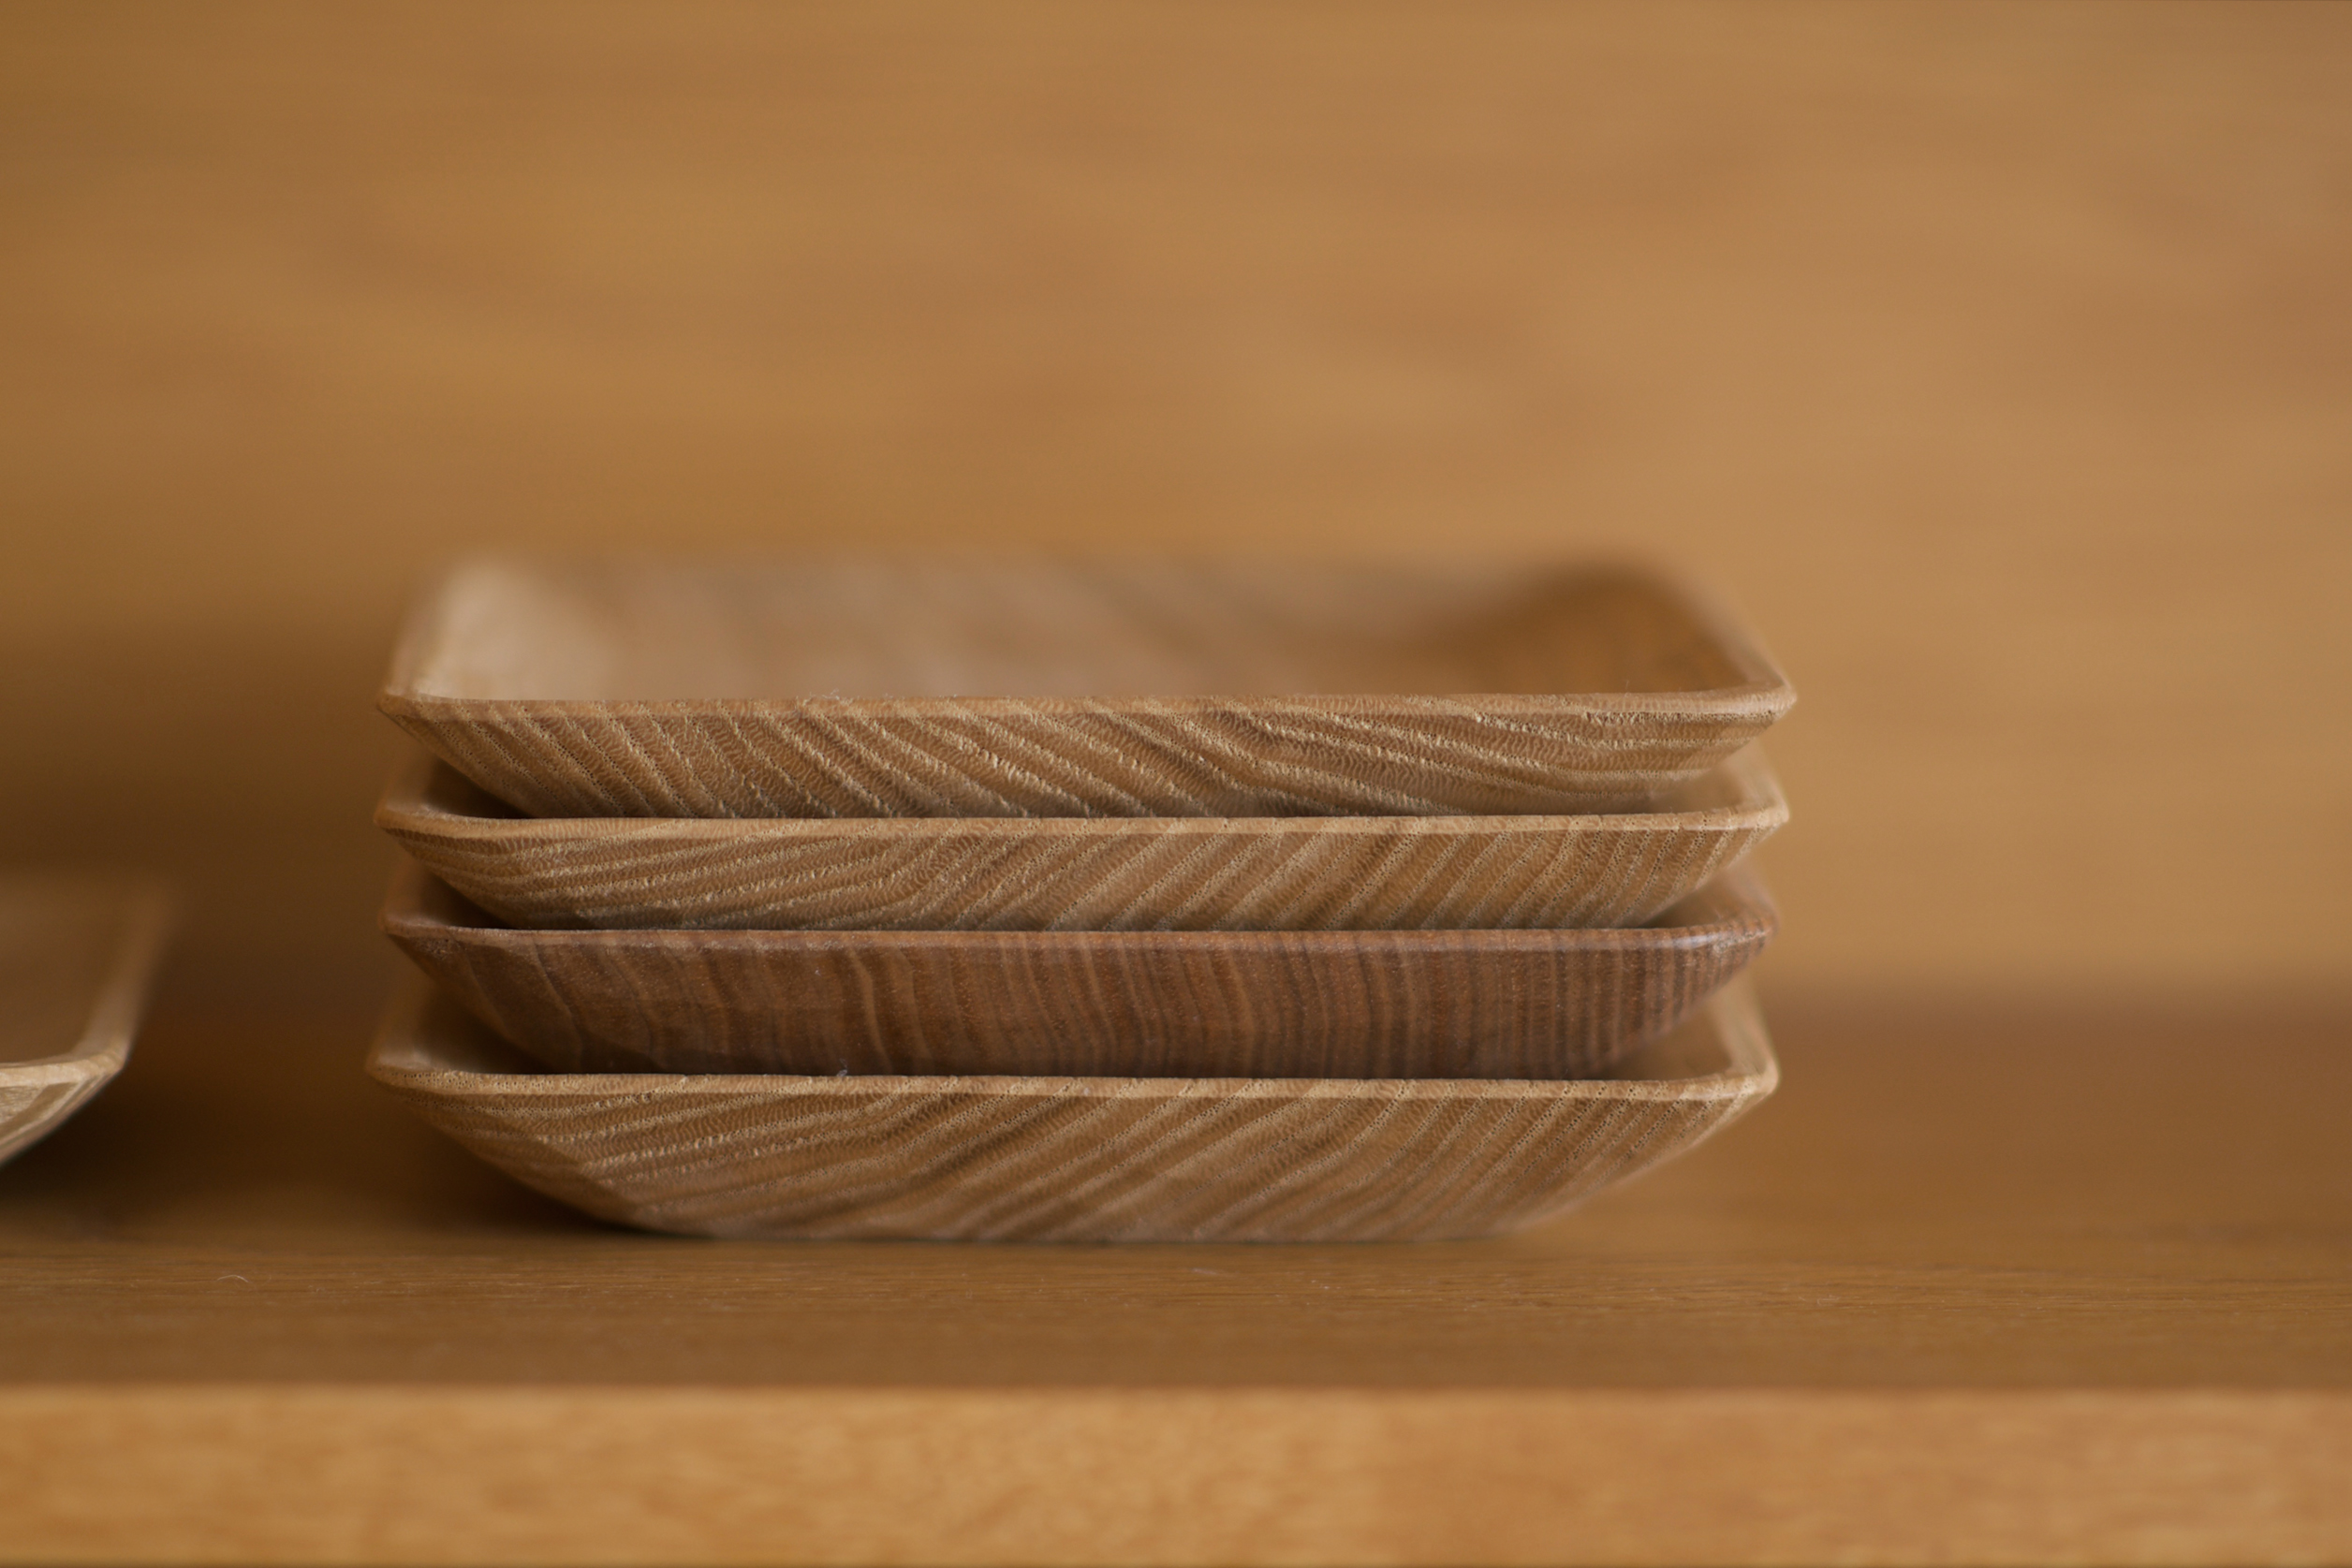 Stacked mountain cherry wooden bread plates by Ryuji Mitani